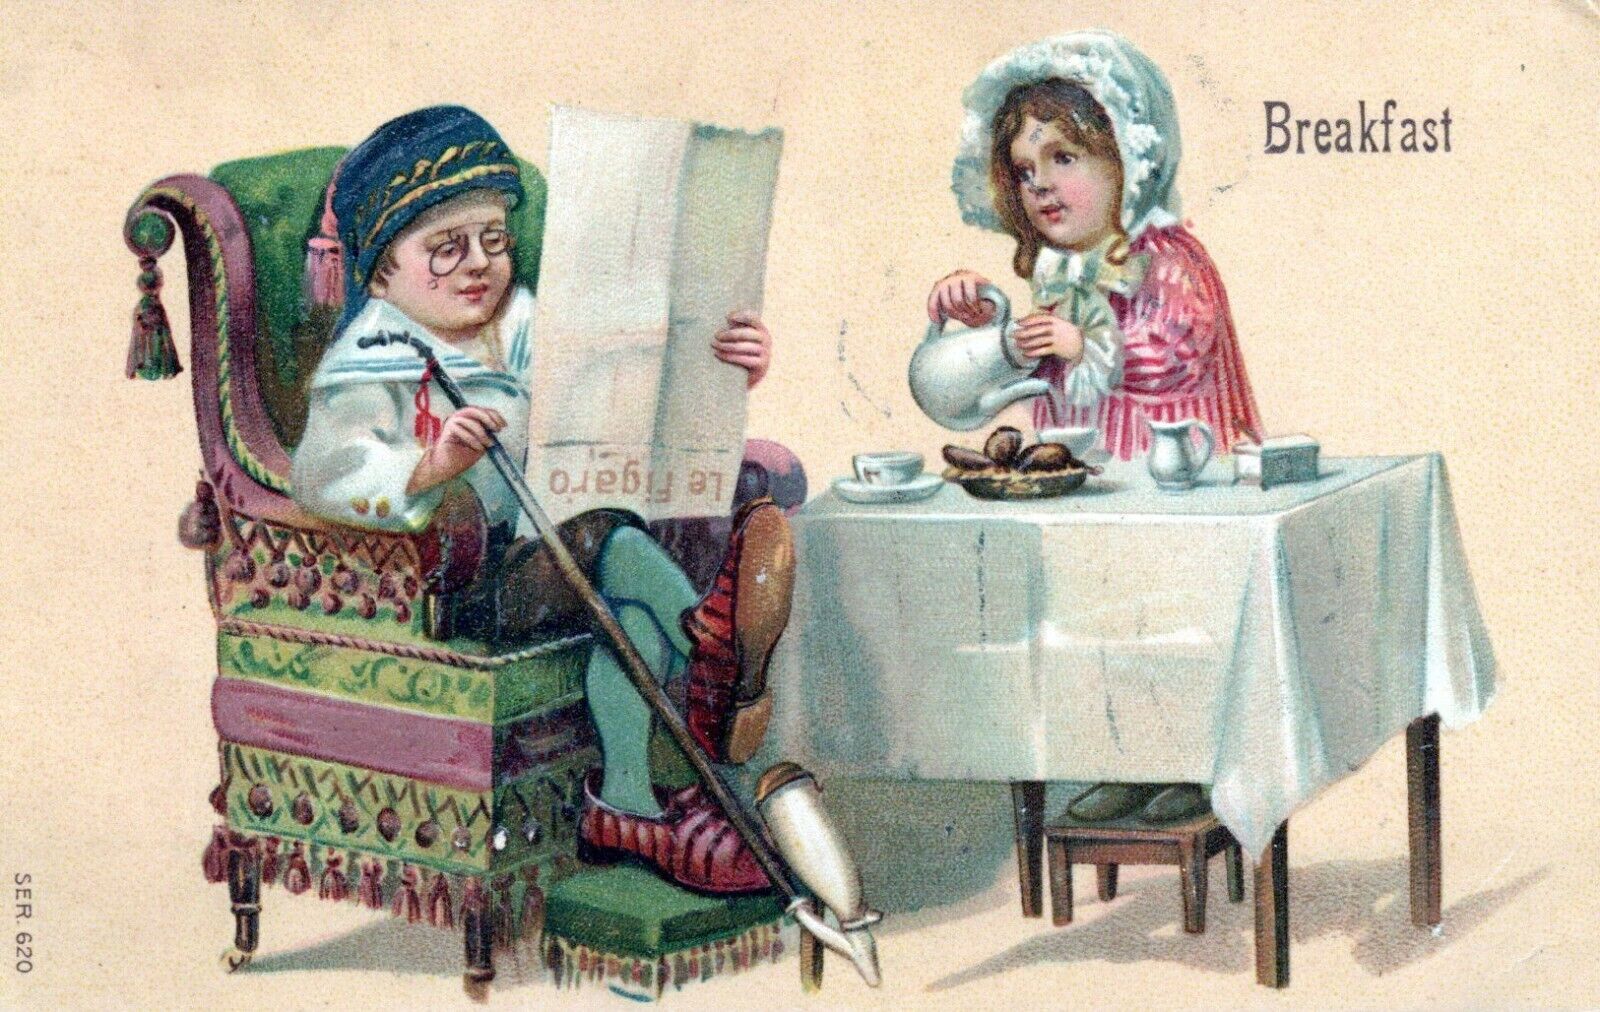 Breakfast Little Kids Cartoon Embossed Vintage Divided Back Post Card